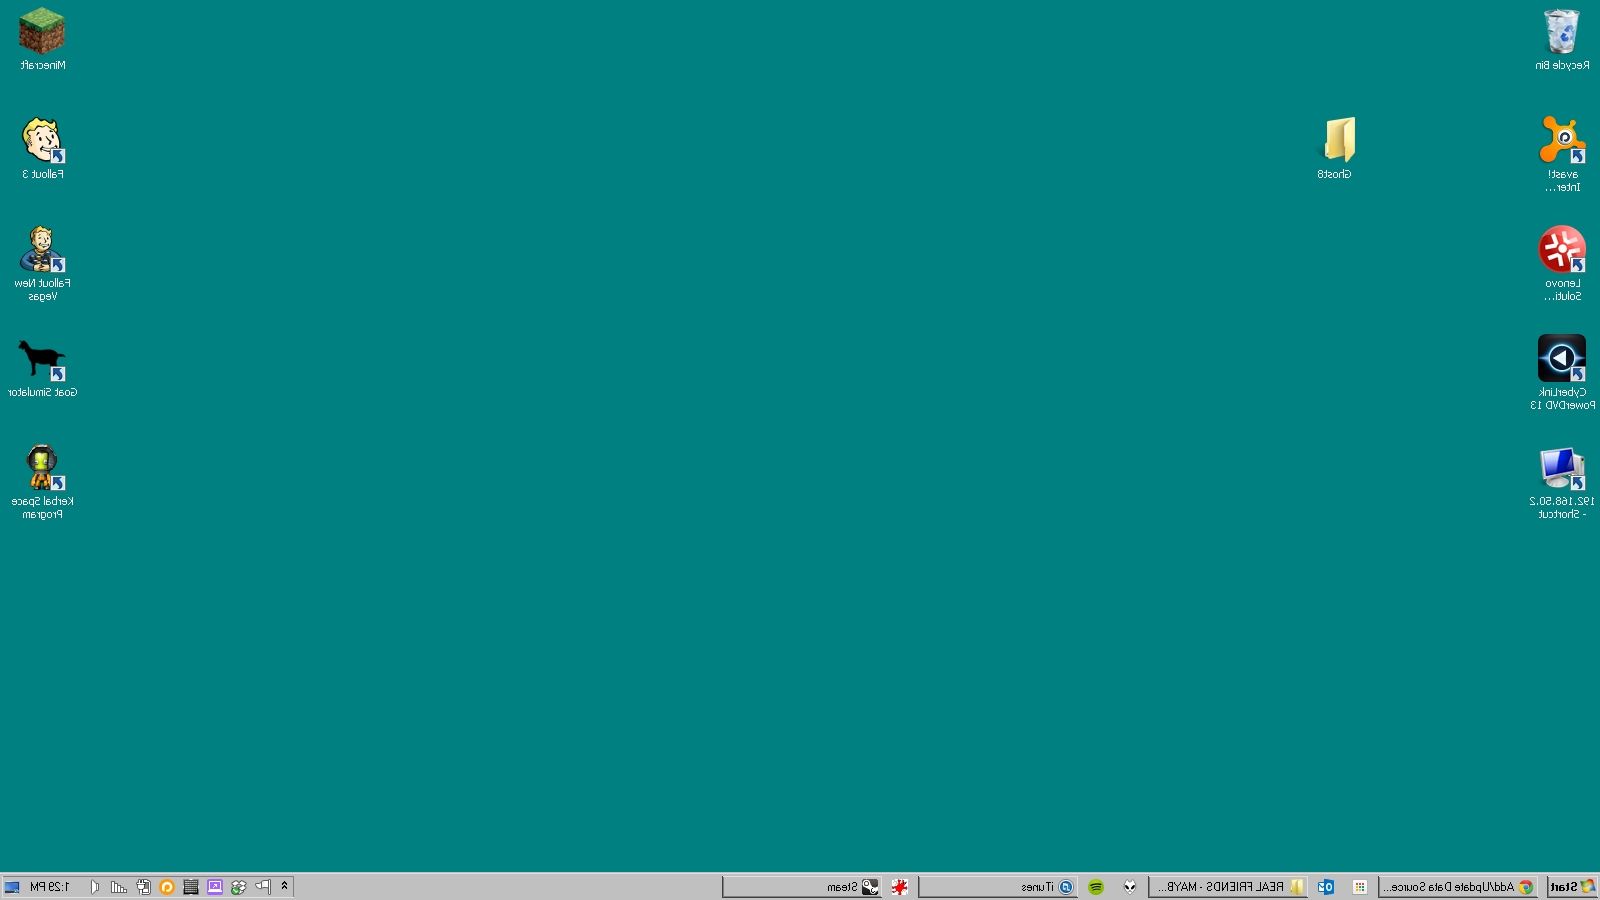 13myjoh Windows 95 Wallpaper Of Windows 98